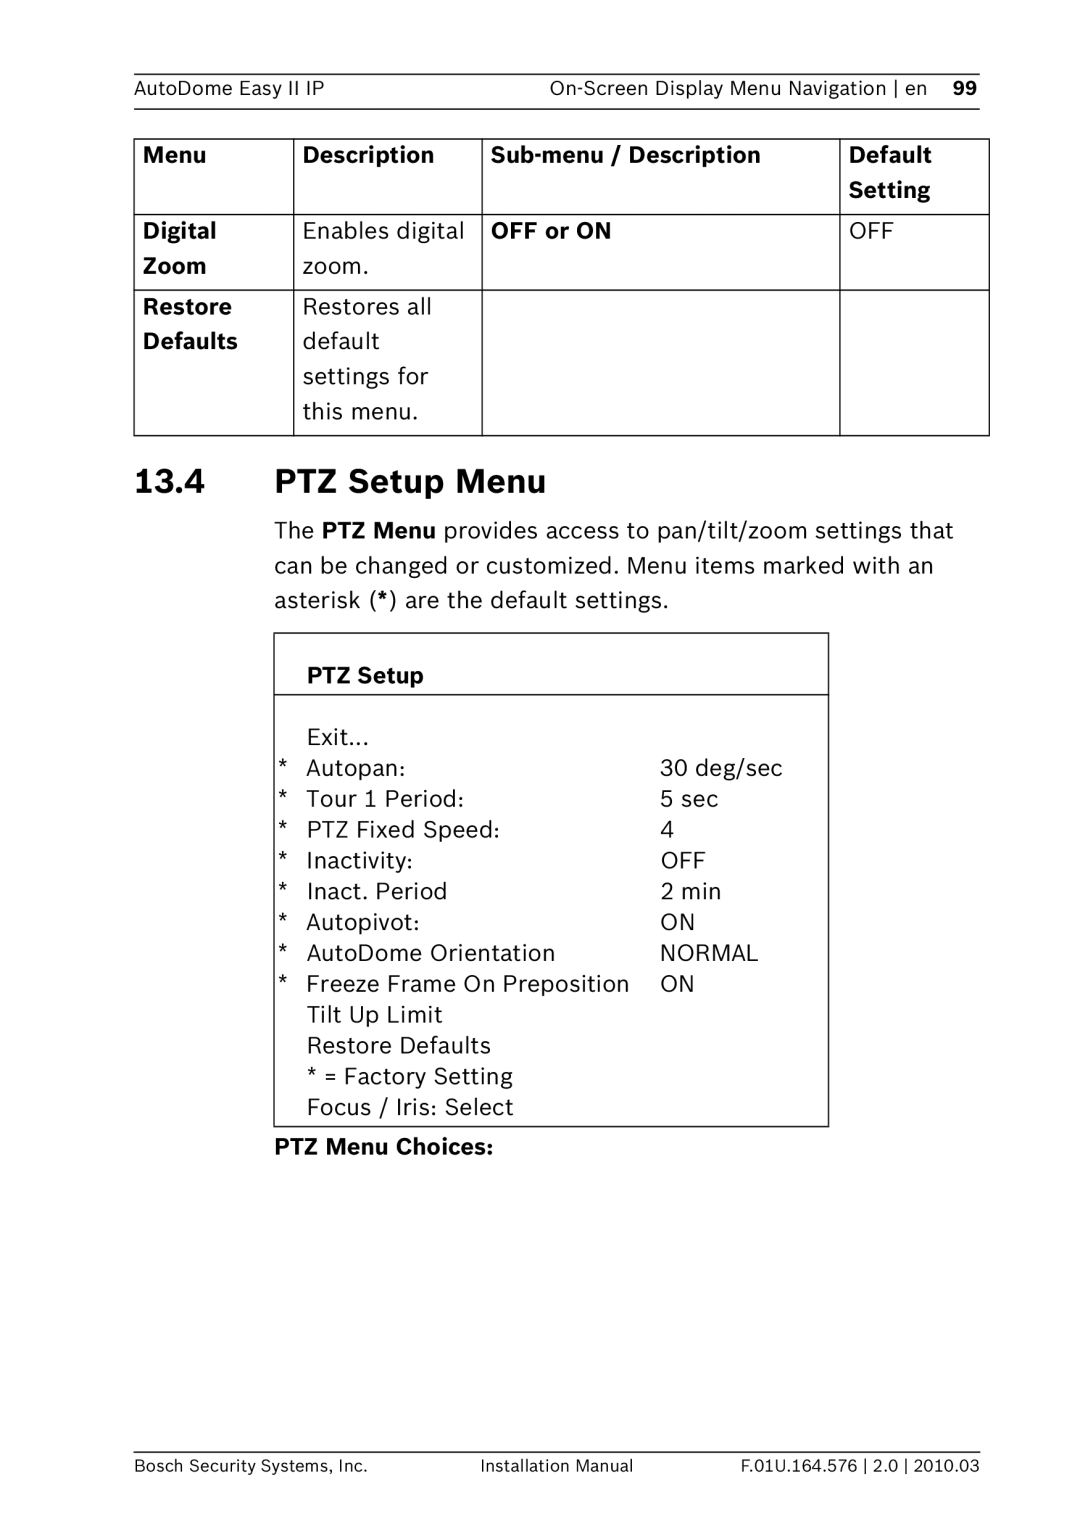 Bosch Appliances VEZ PTZ Setup Menu, Zoom Restore Restores all Defaults Settings for This menu, PTZ Menu Choices 